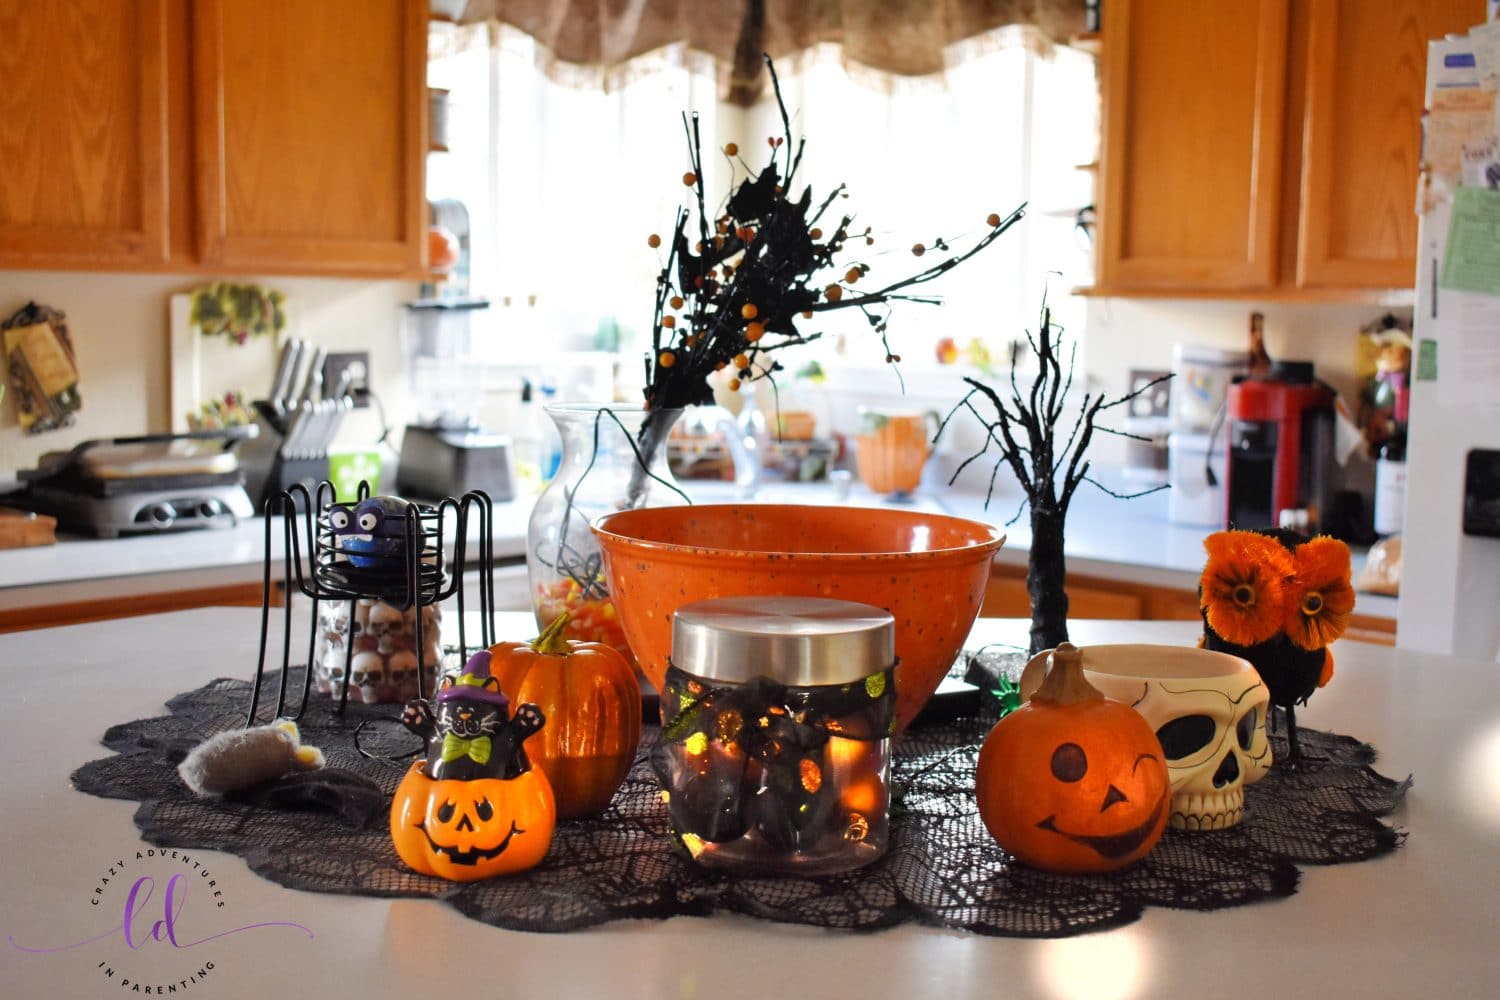 Countertop Bar Kitchen Area Halloween and Fall Decor